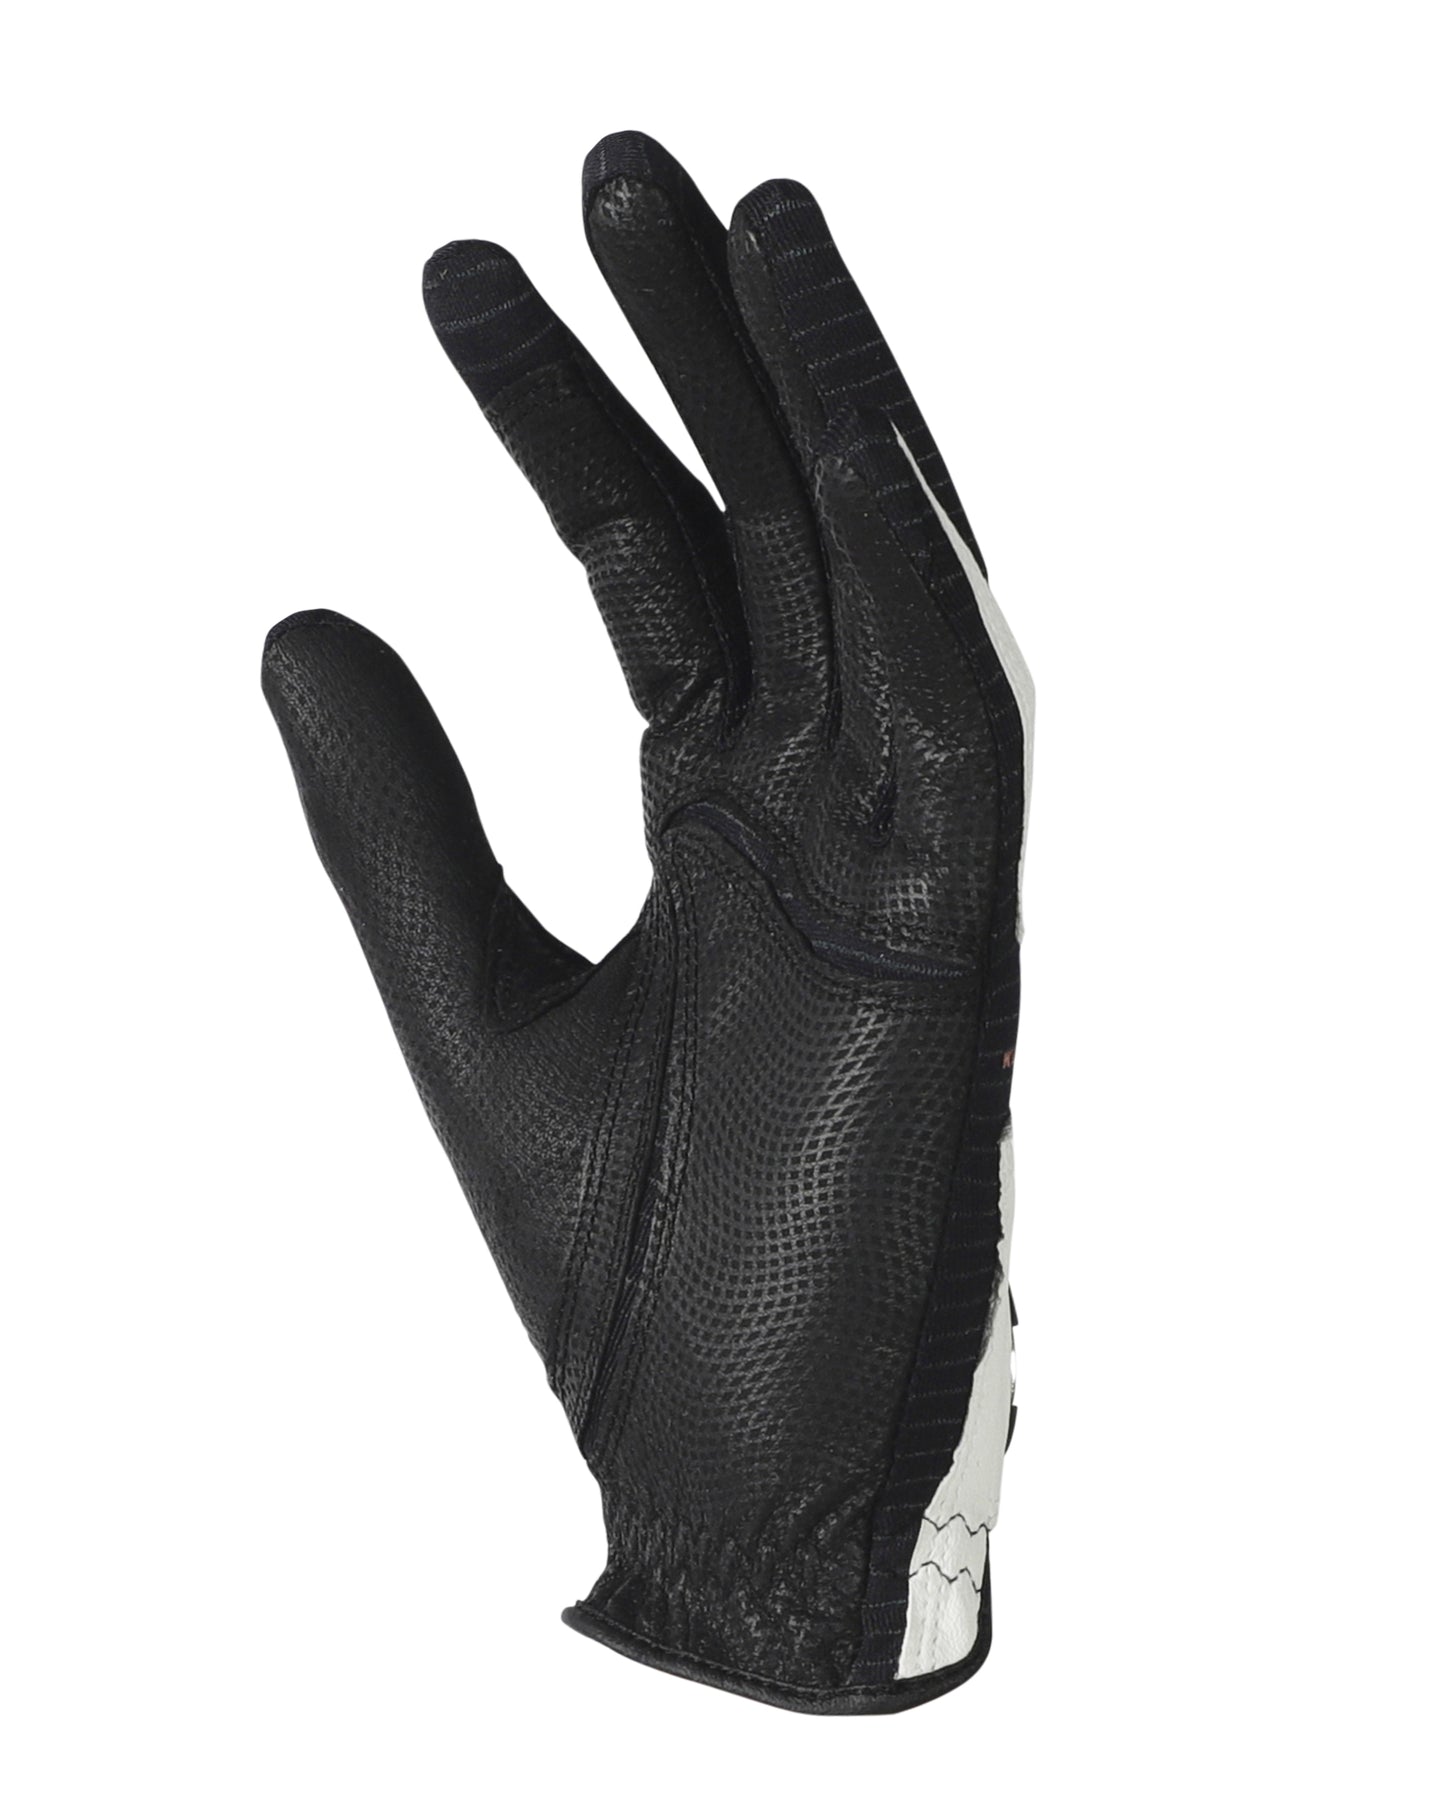 Copper Infused Ultra Premium Kangaroo Leather Golf Glove Black/White, Black Palm